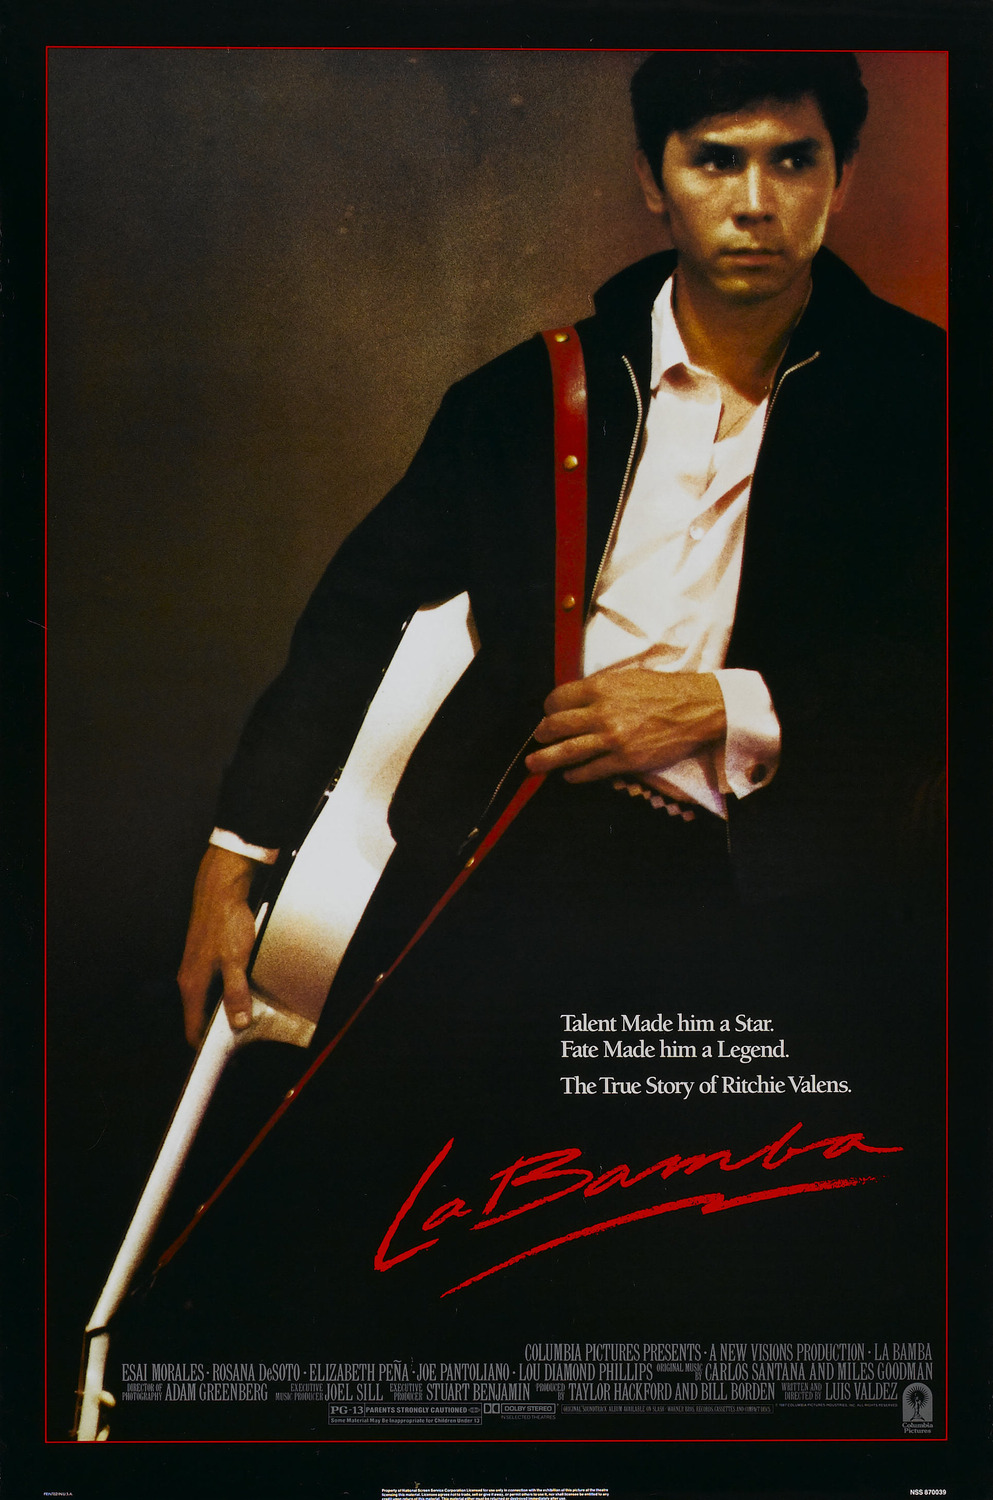 Extra Large Movie Poster Image for La Bamba (#1 of 2)